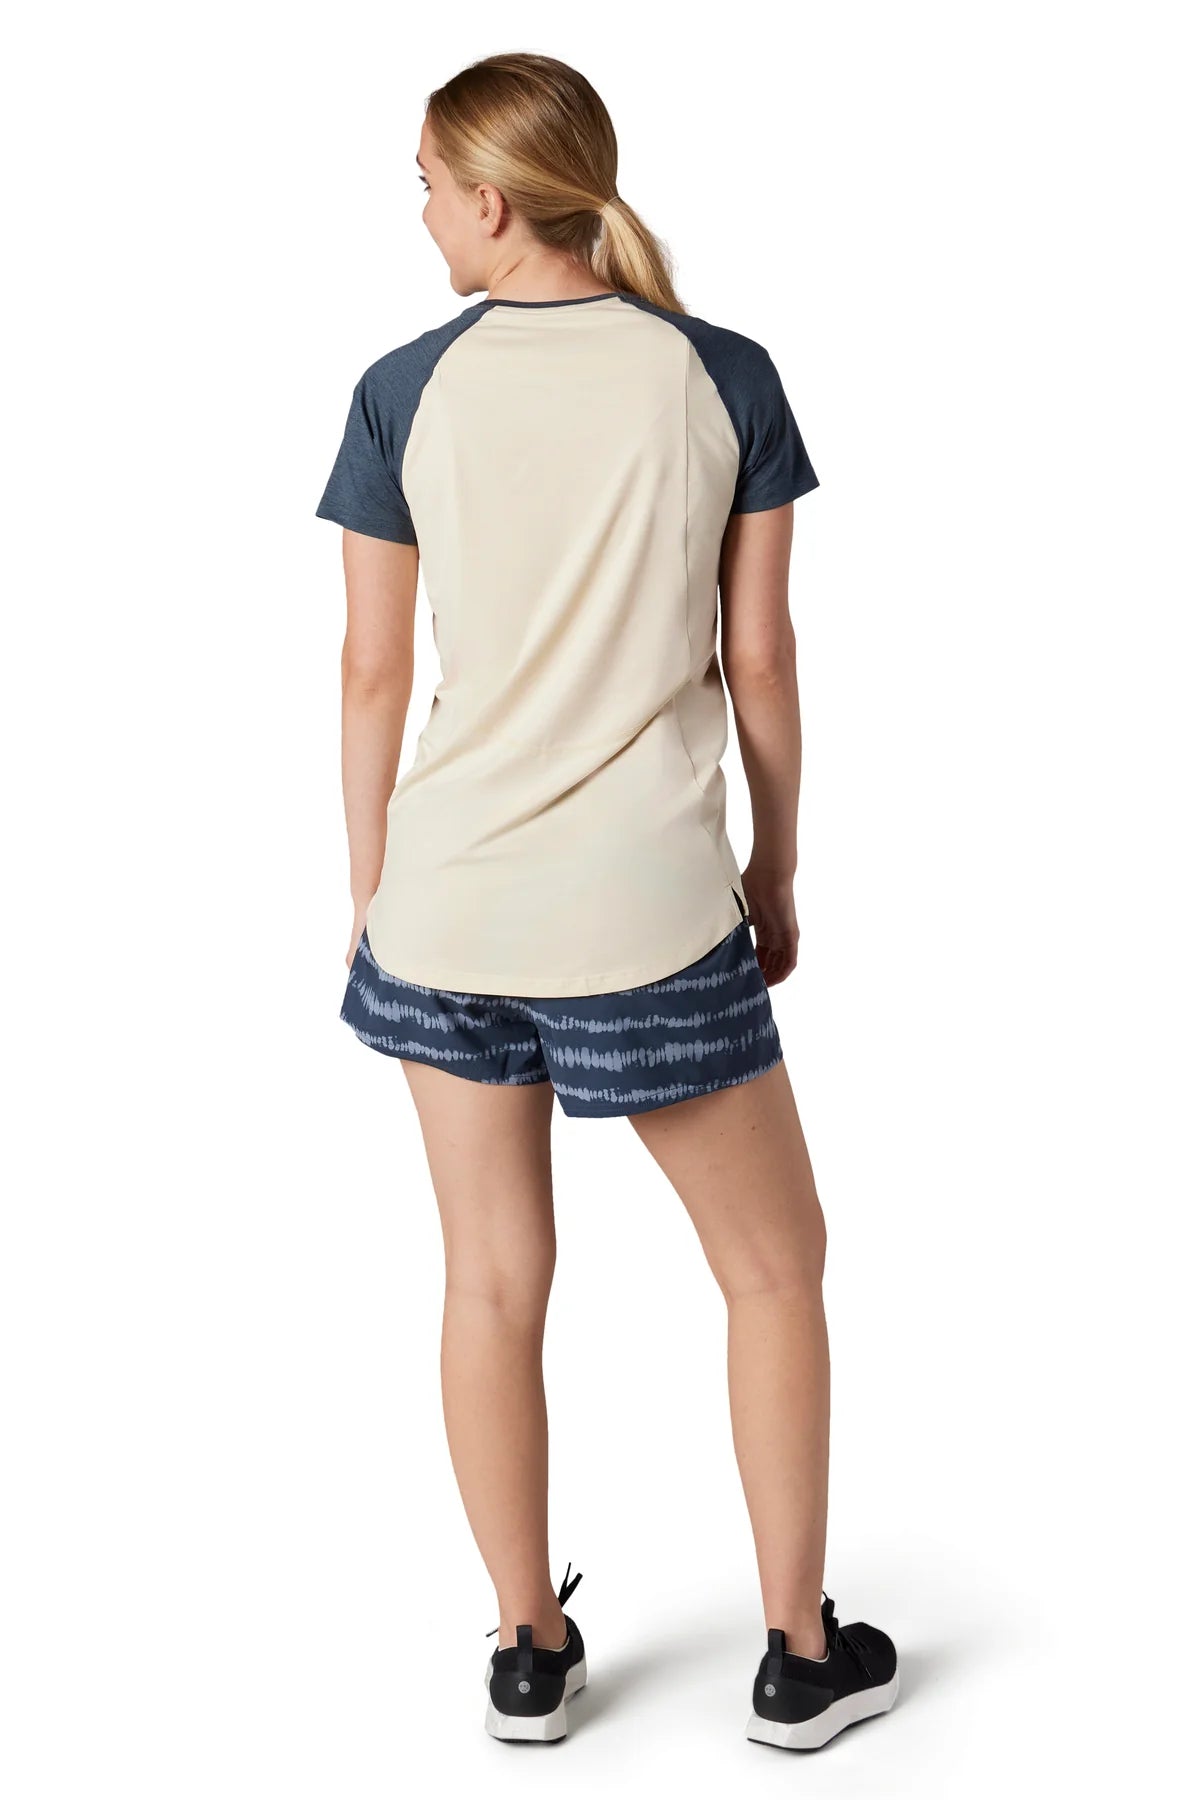 Flylow Jessi Shirt - Women's bike apparel baseball t shirt style blue, white